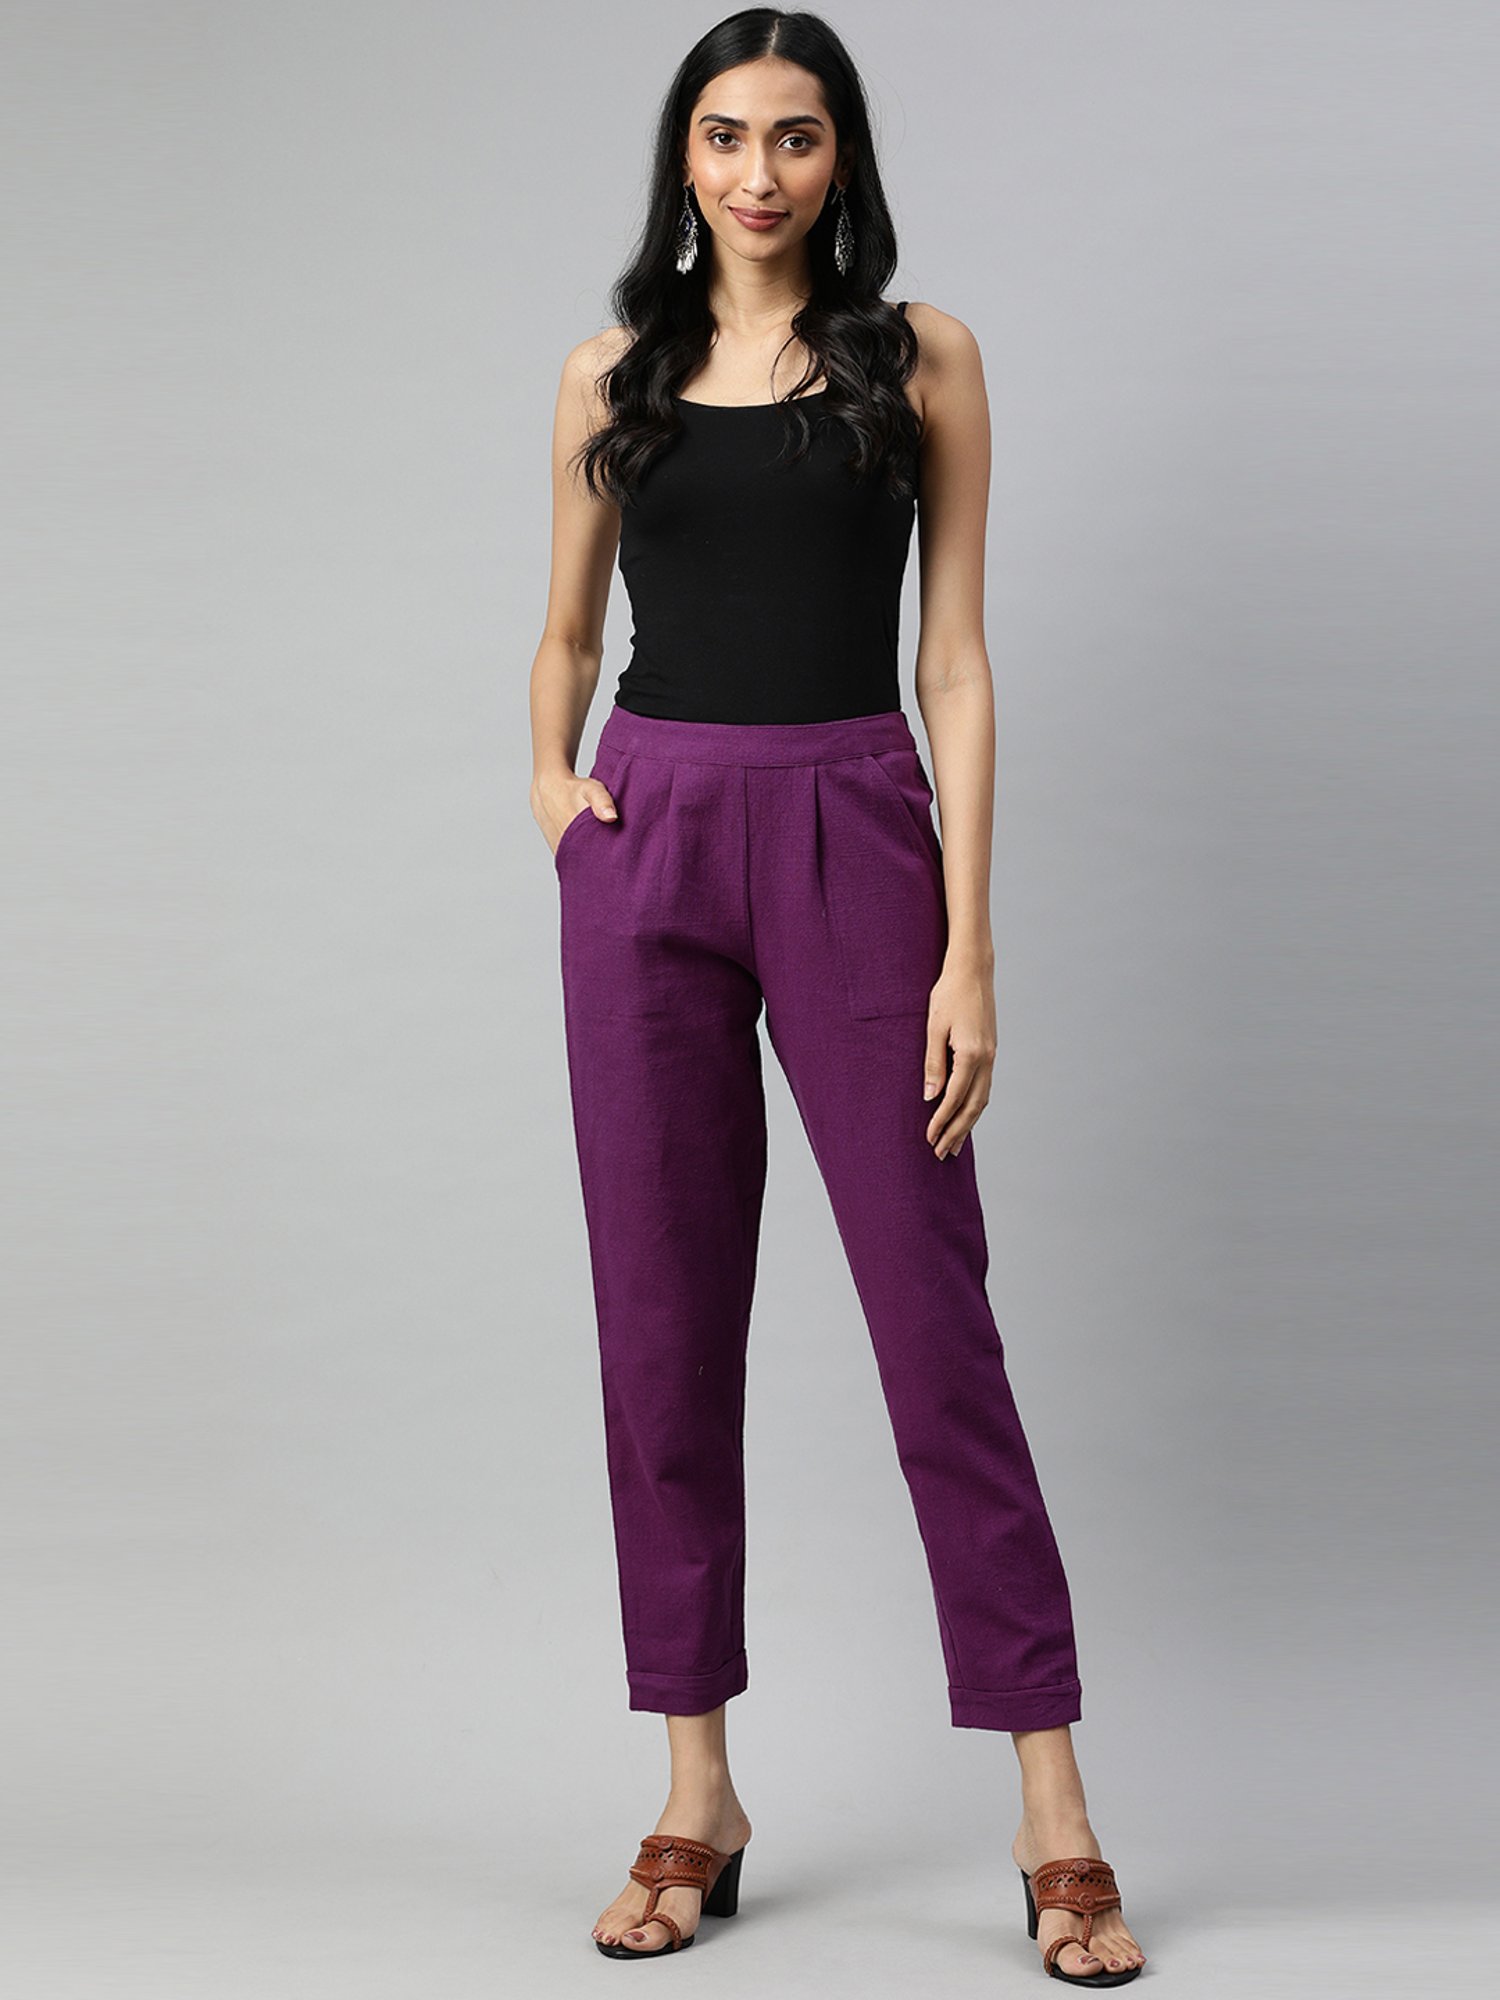 Women's Purple Pants + FREE SHIPPING | Clothing | Zappos.com